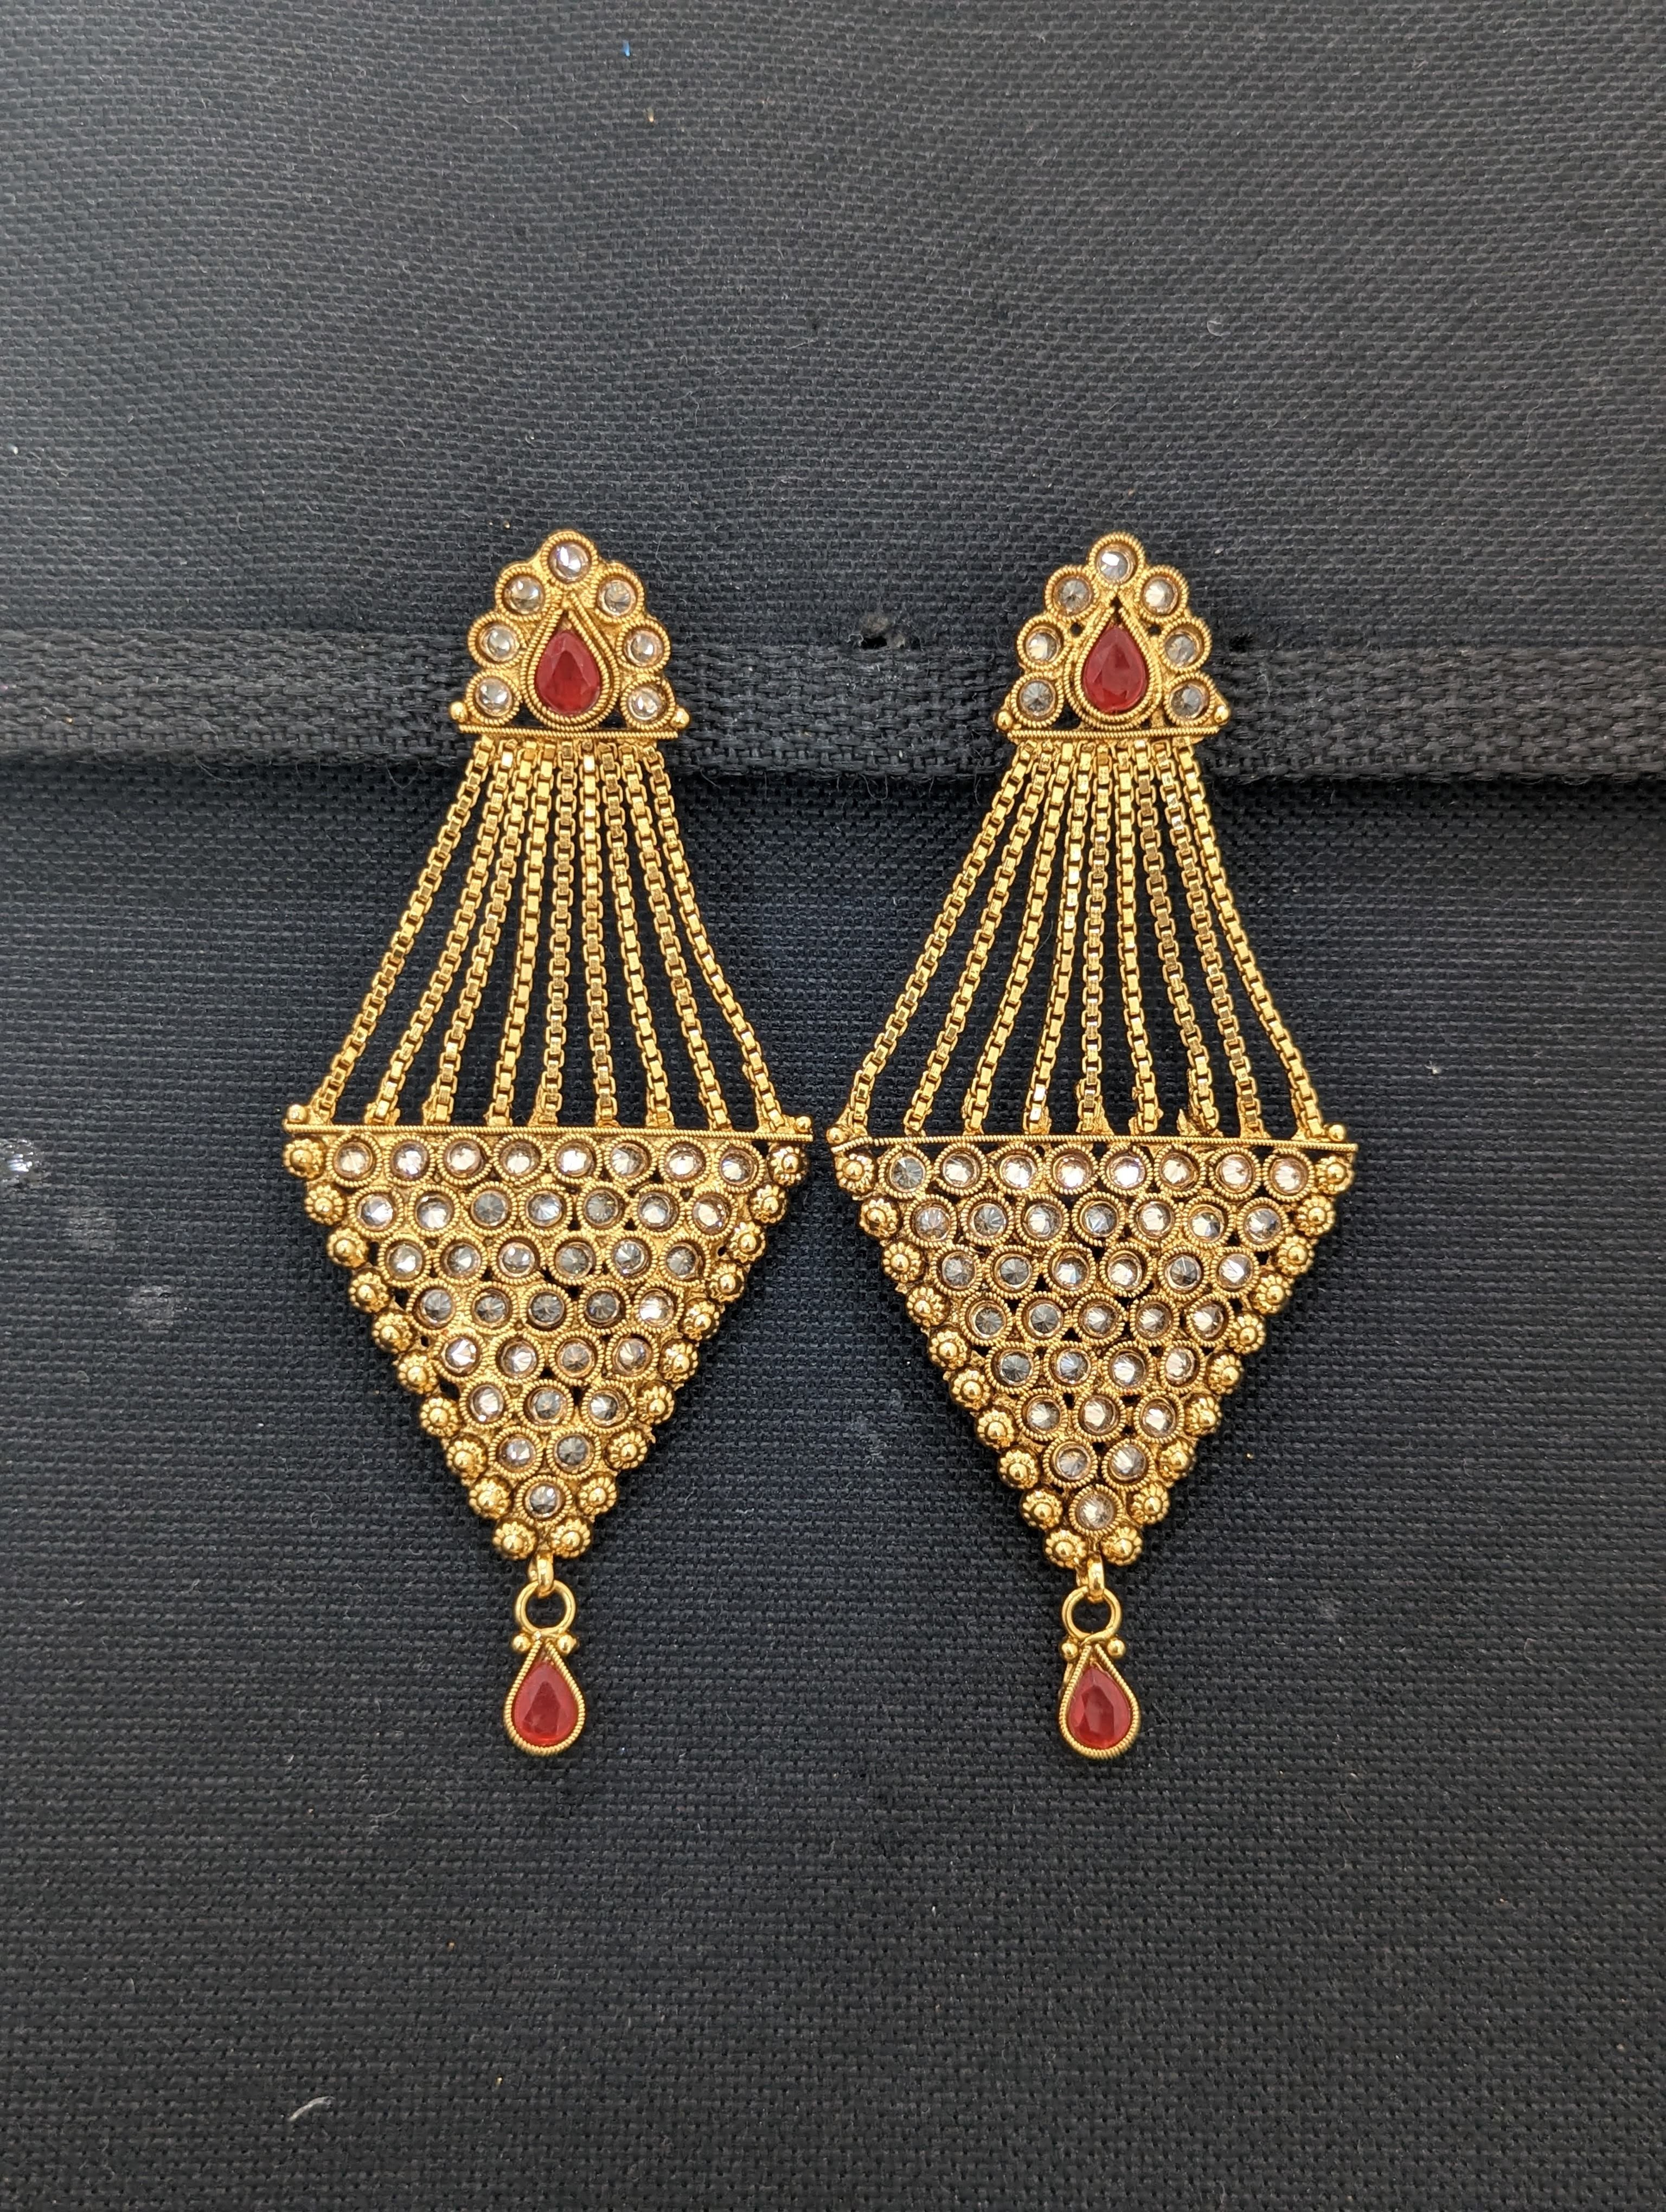 Antique Gold Plated Indian Chand Bali Jhumka Dangler White Bead Wedding  Earrings | eBay